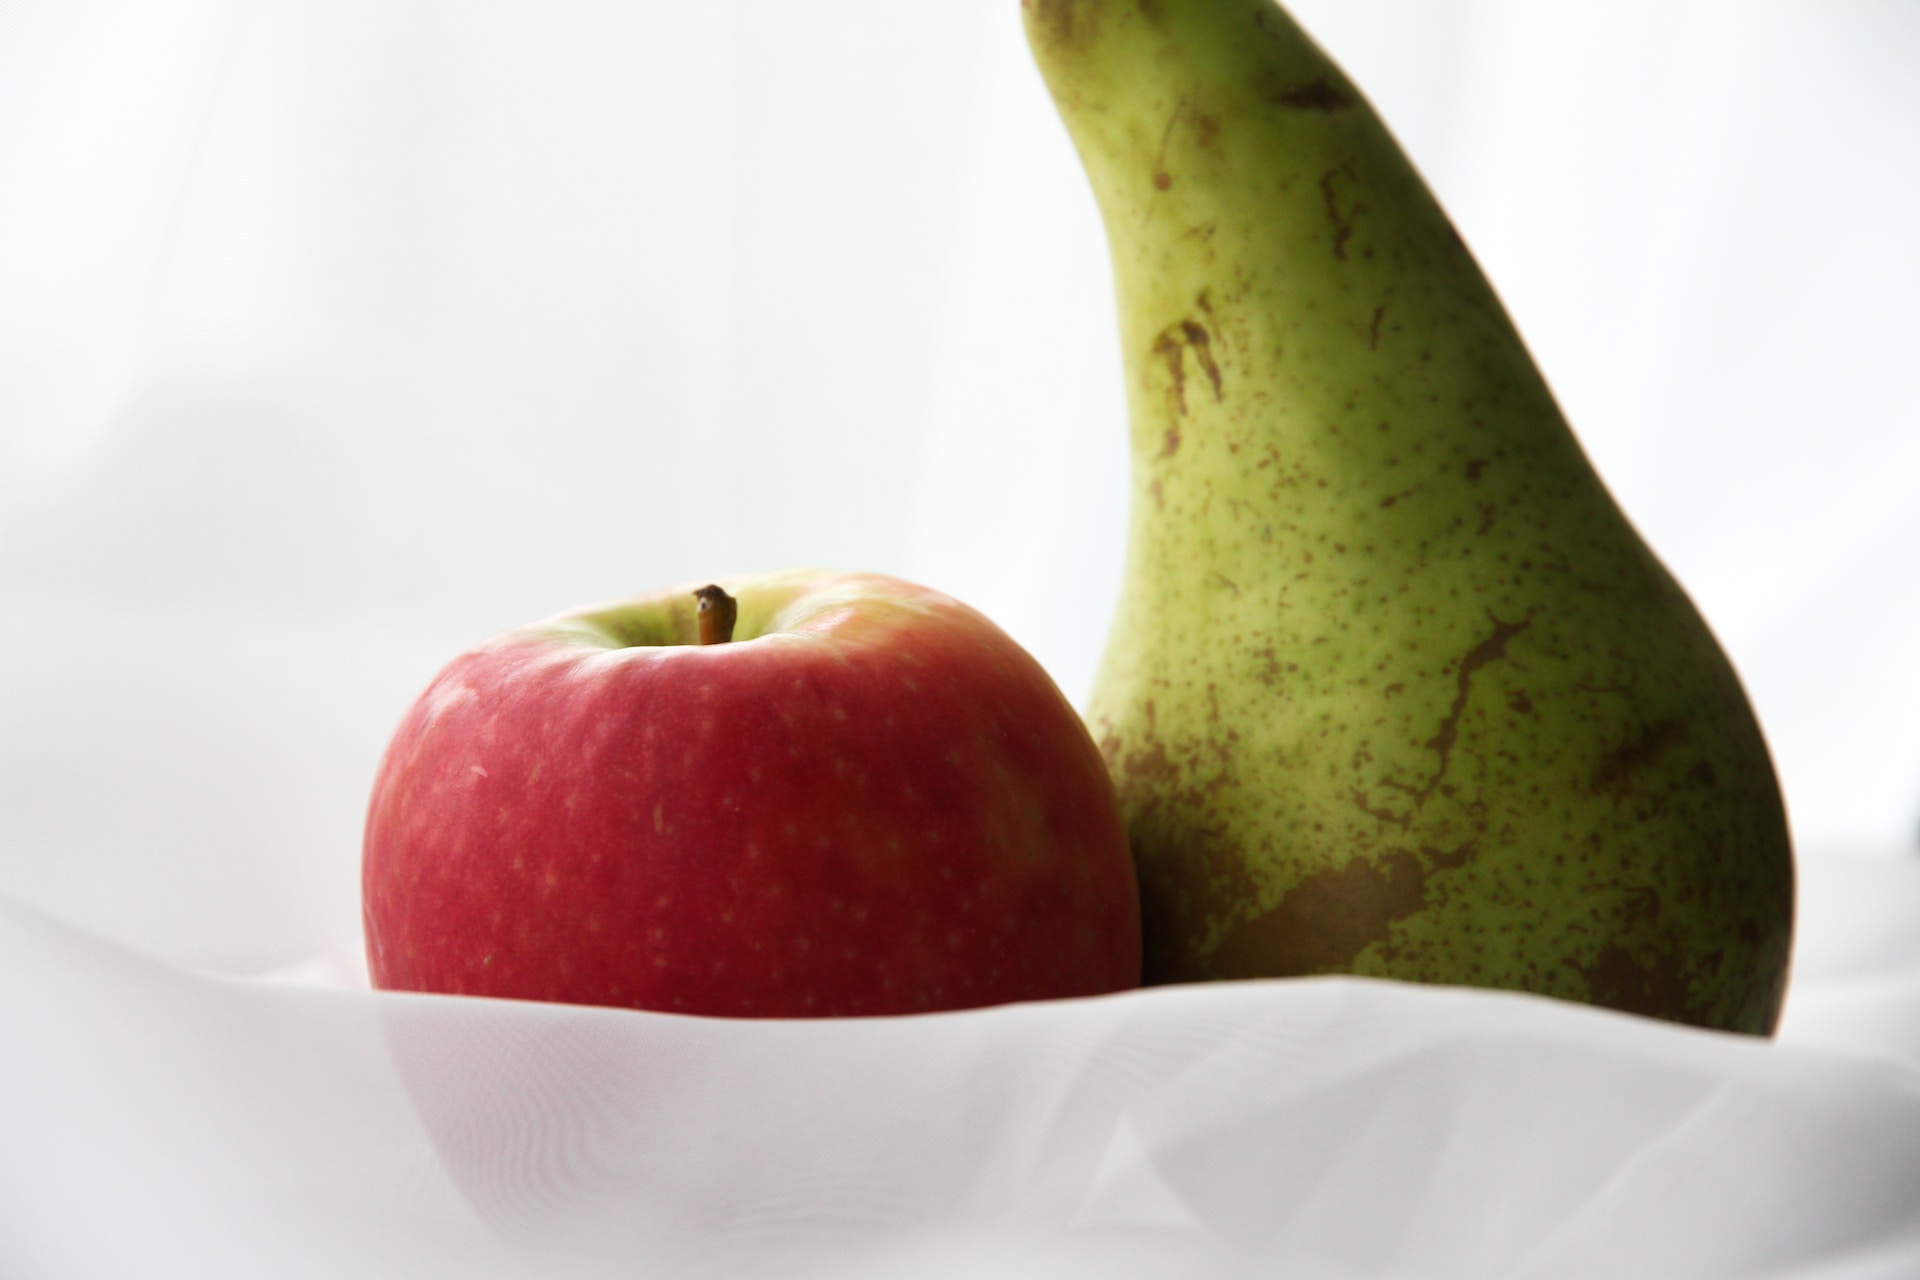 An apple and a pear.